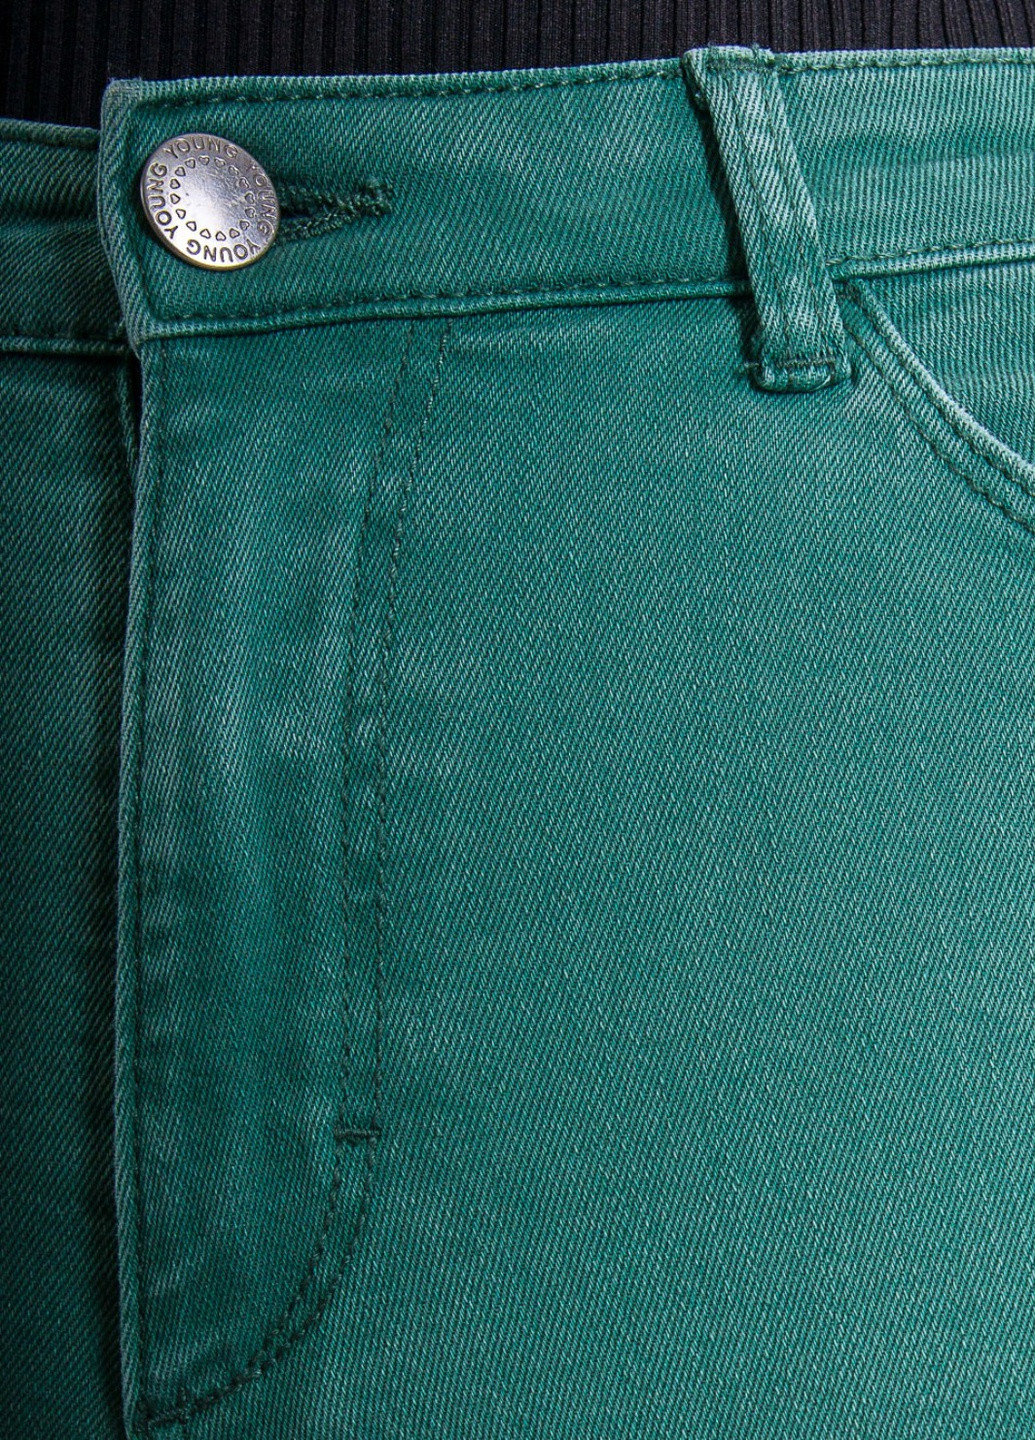 Зеленые джинсы H&M